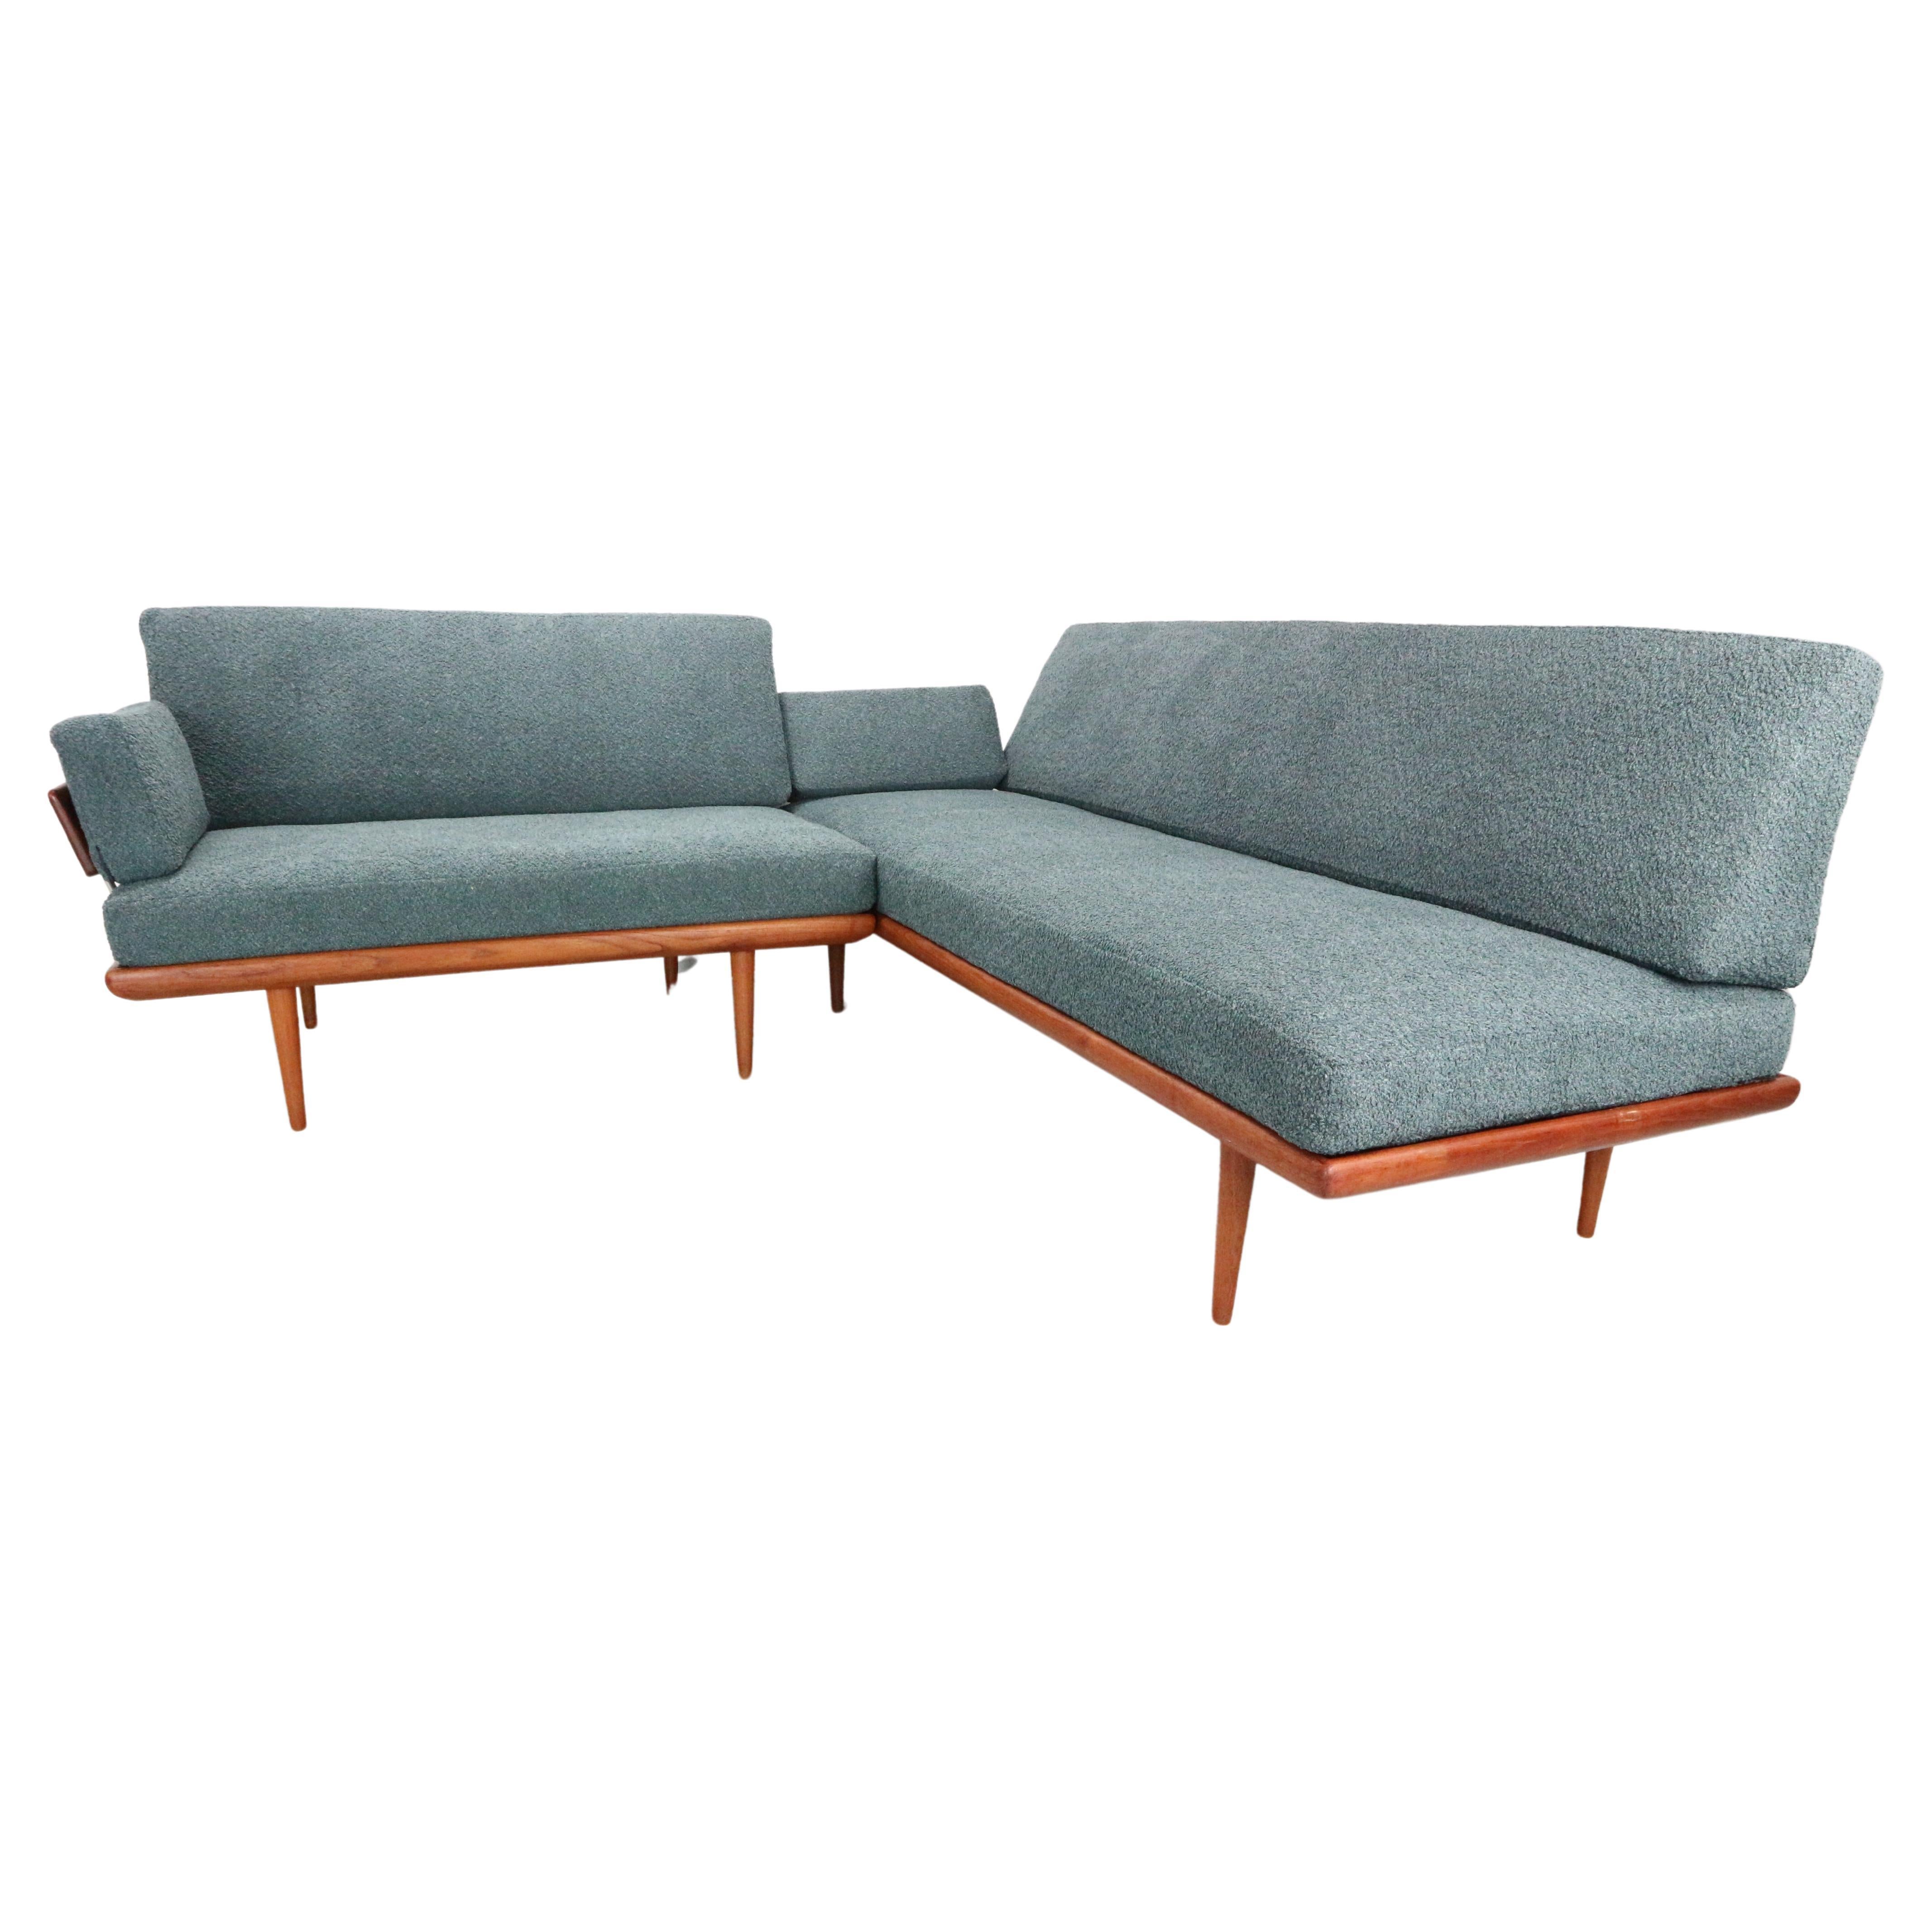 5-sitziges Sofa "MINERVA" von Peter Hvidt und Olga Molgaard Nielsen aus petrolfarbenem Bouclé